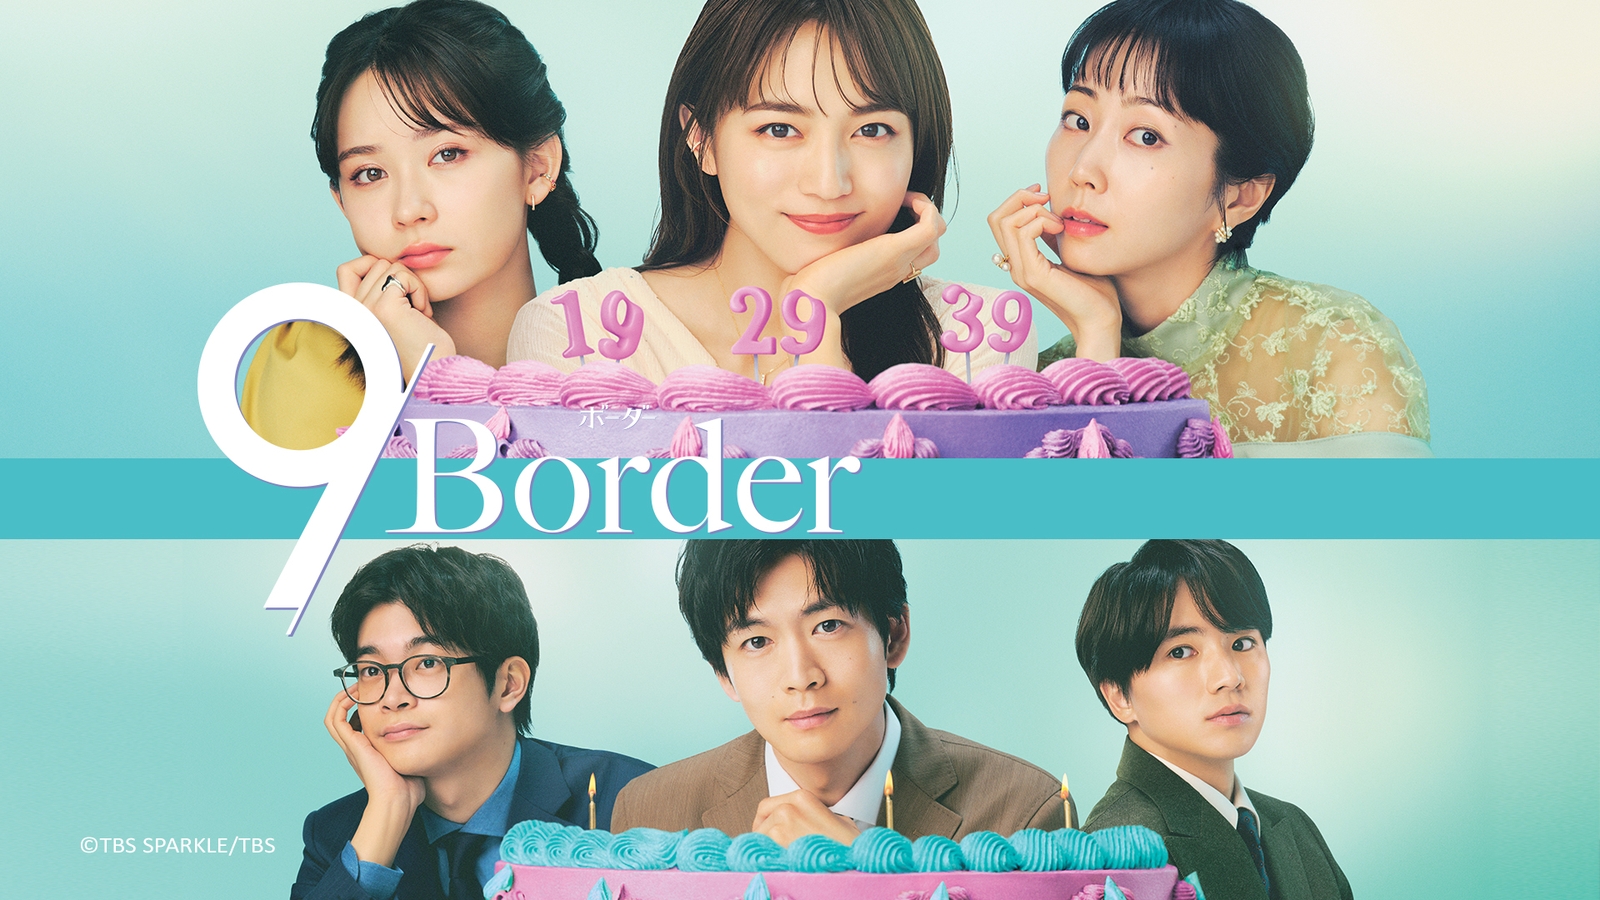 9 Border